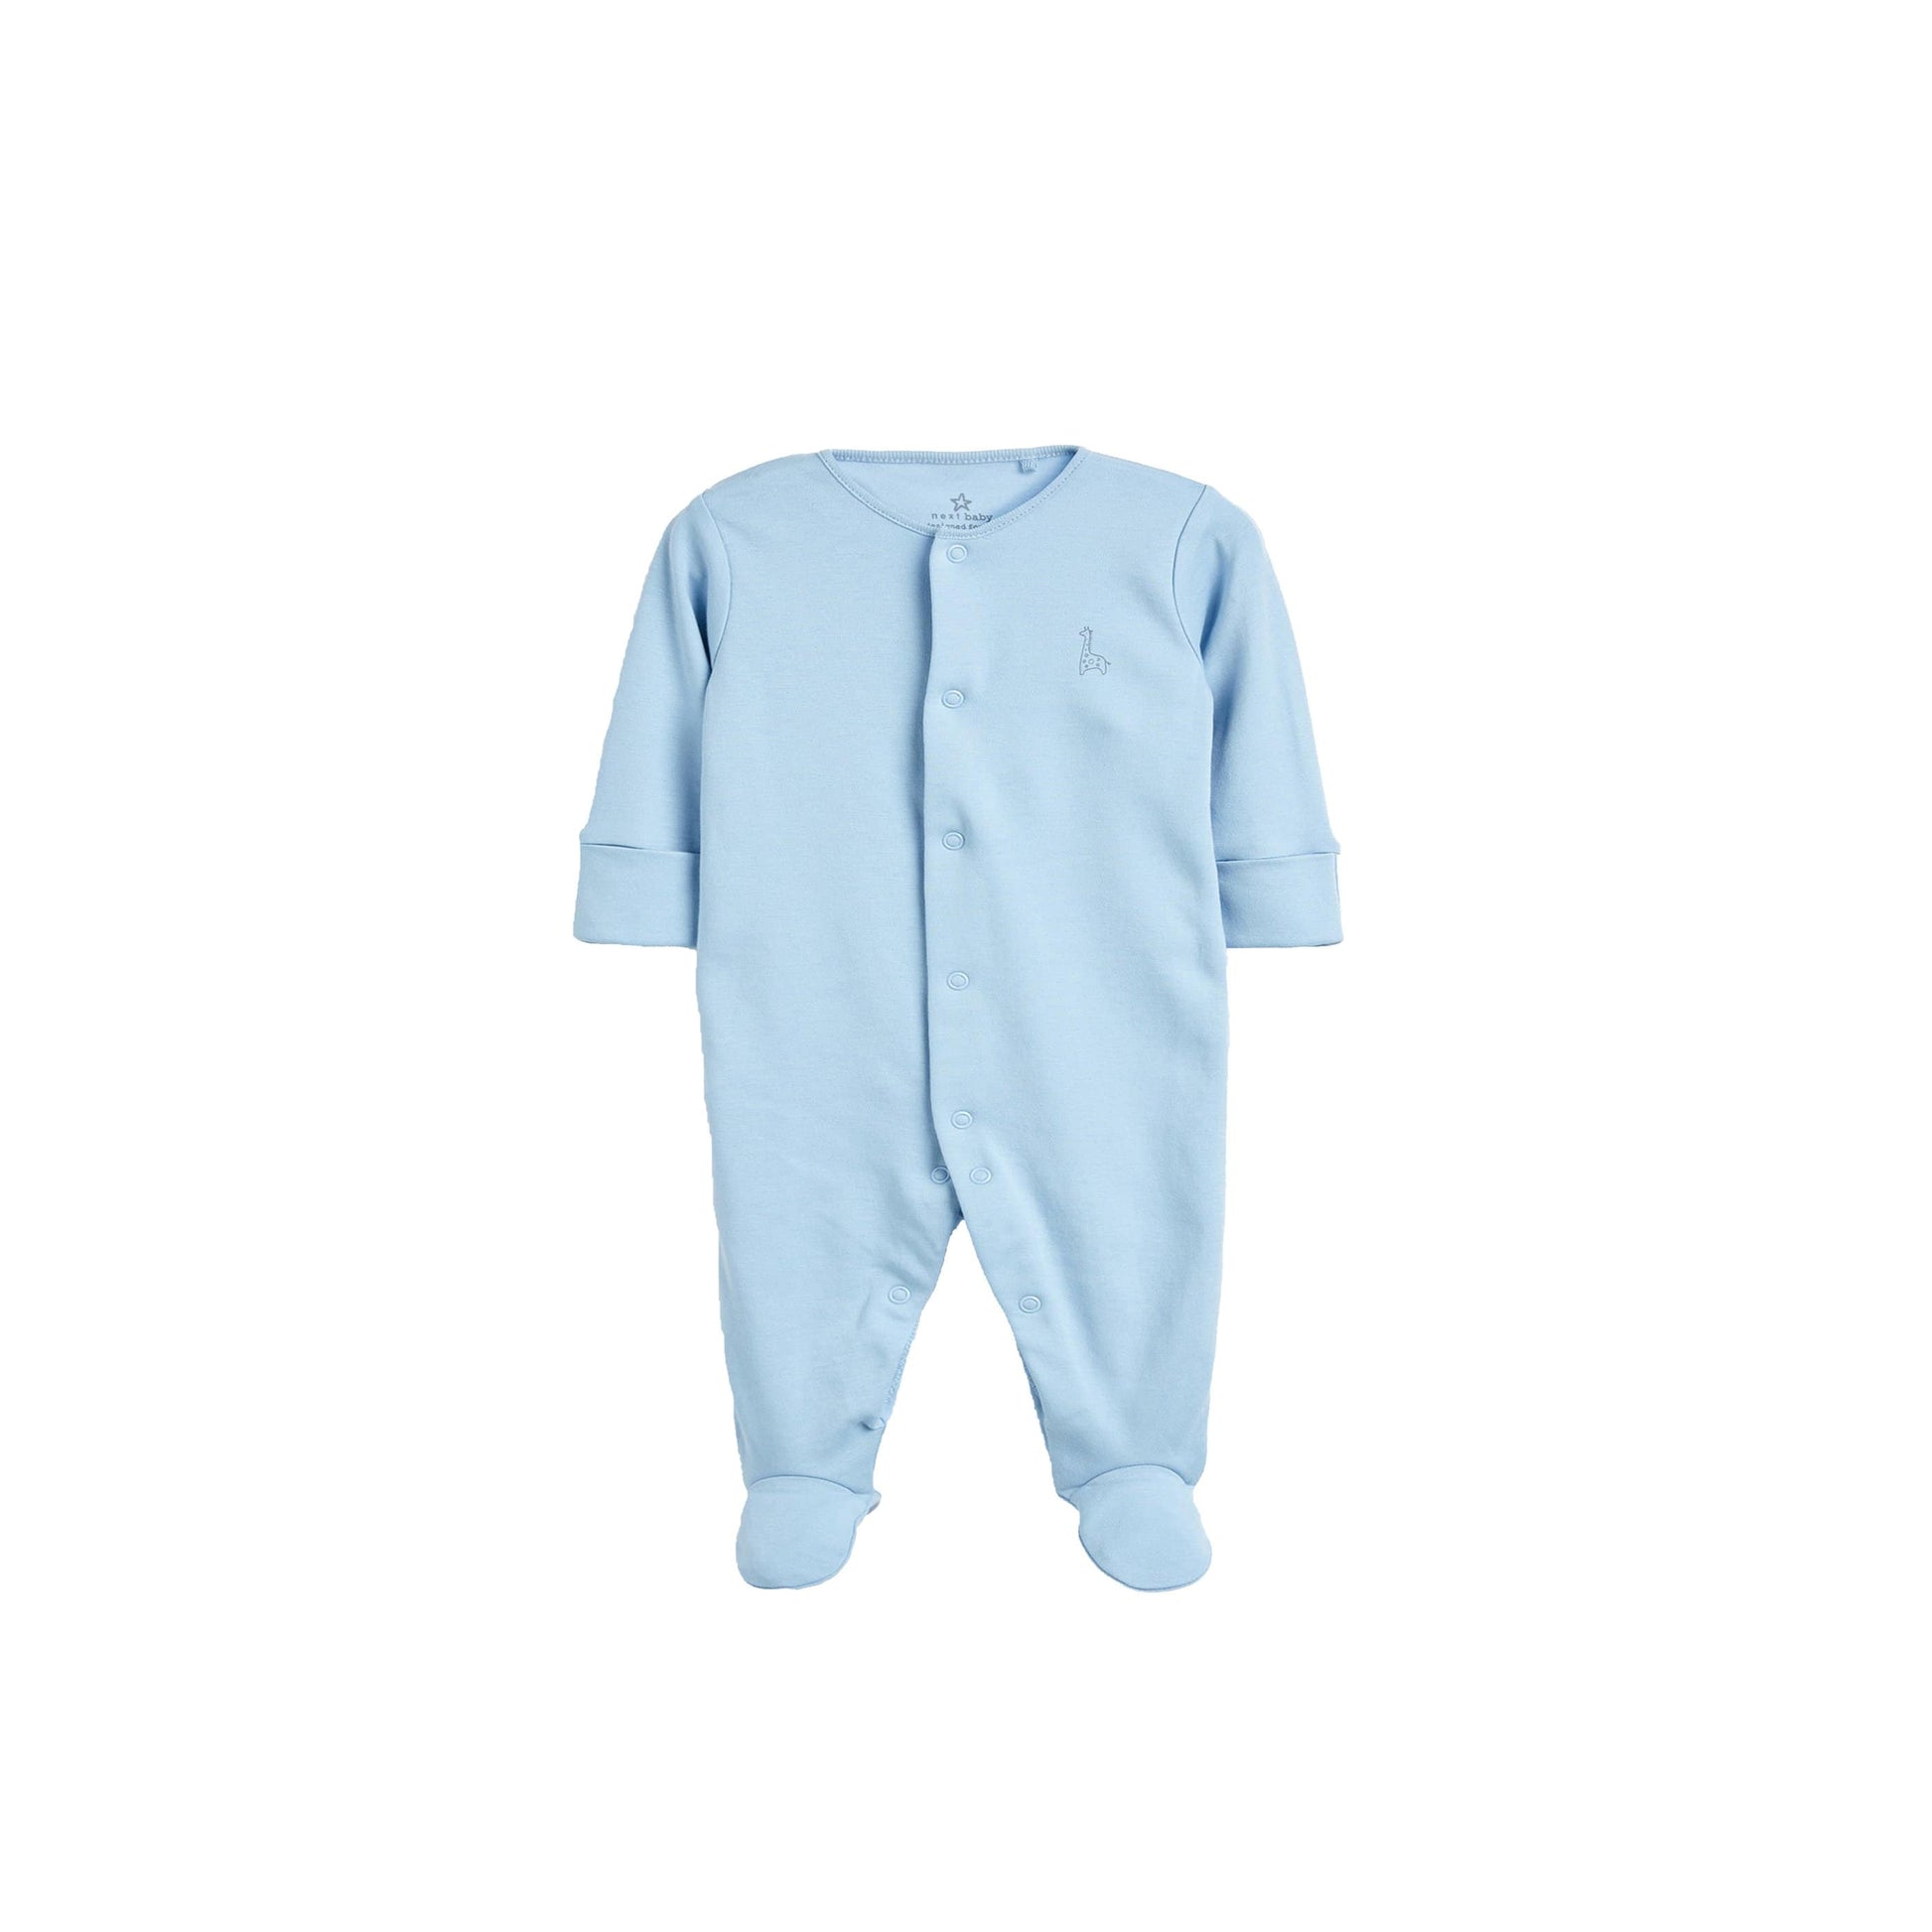 Next Baby Boy 1st size NEXT - Newborn Baby sleepsuits - Set of 3